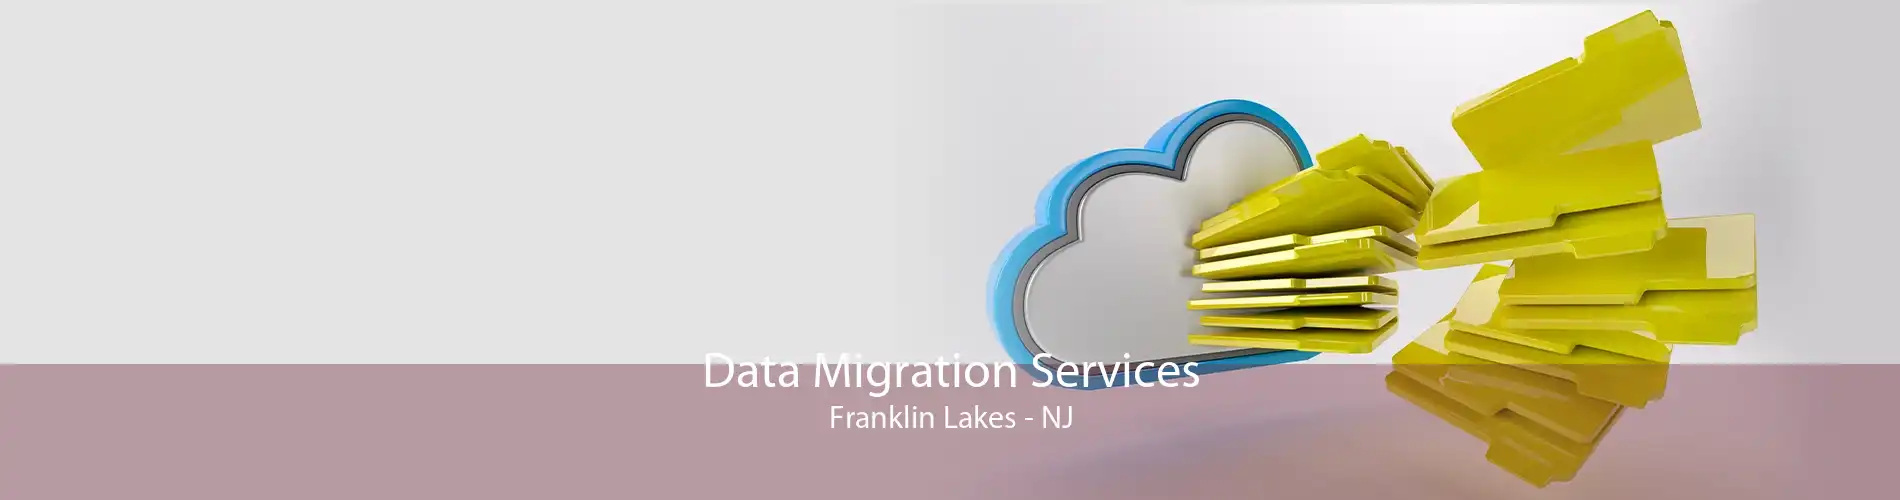 Data Migration Services Franklin Lakes - NJ